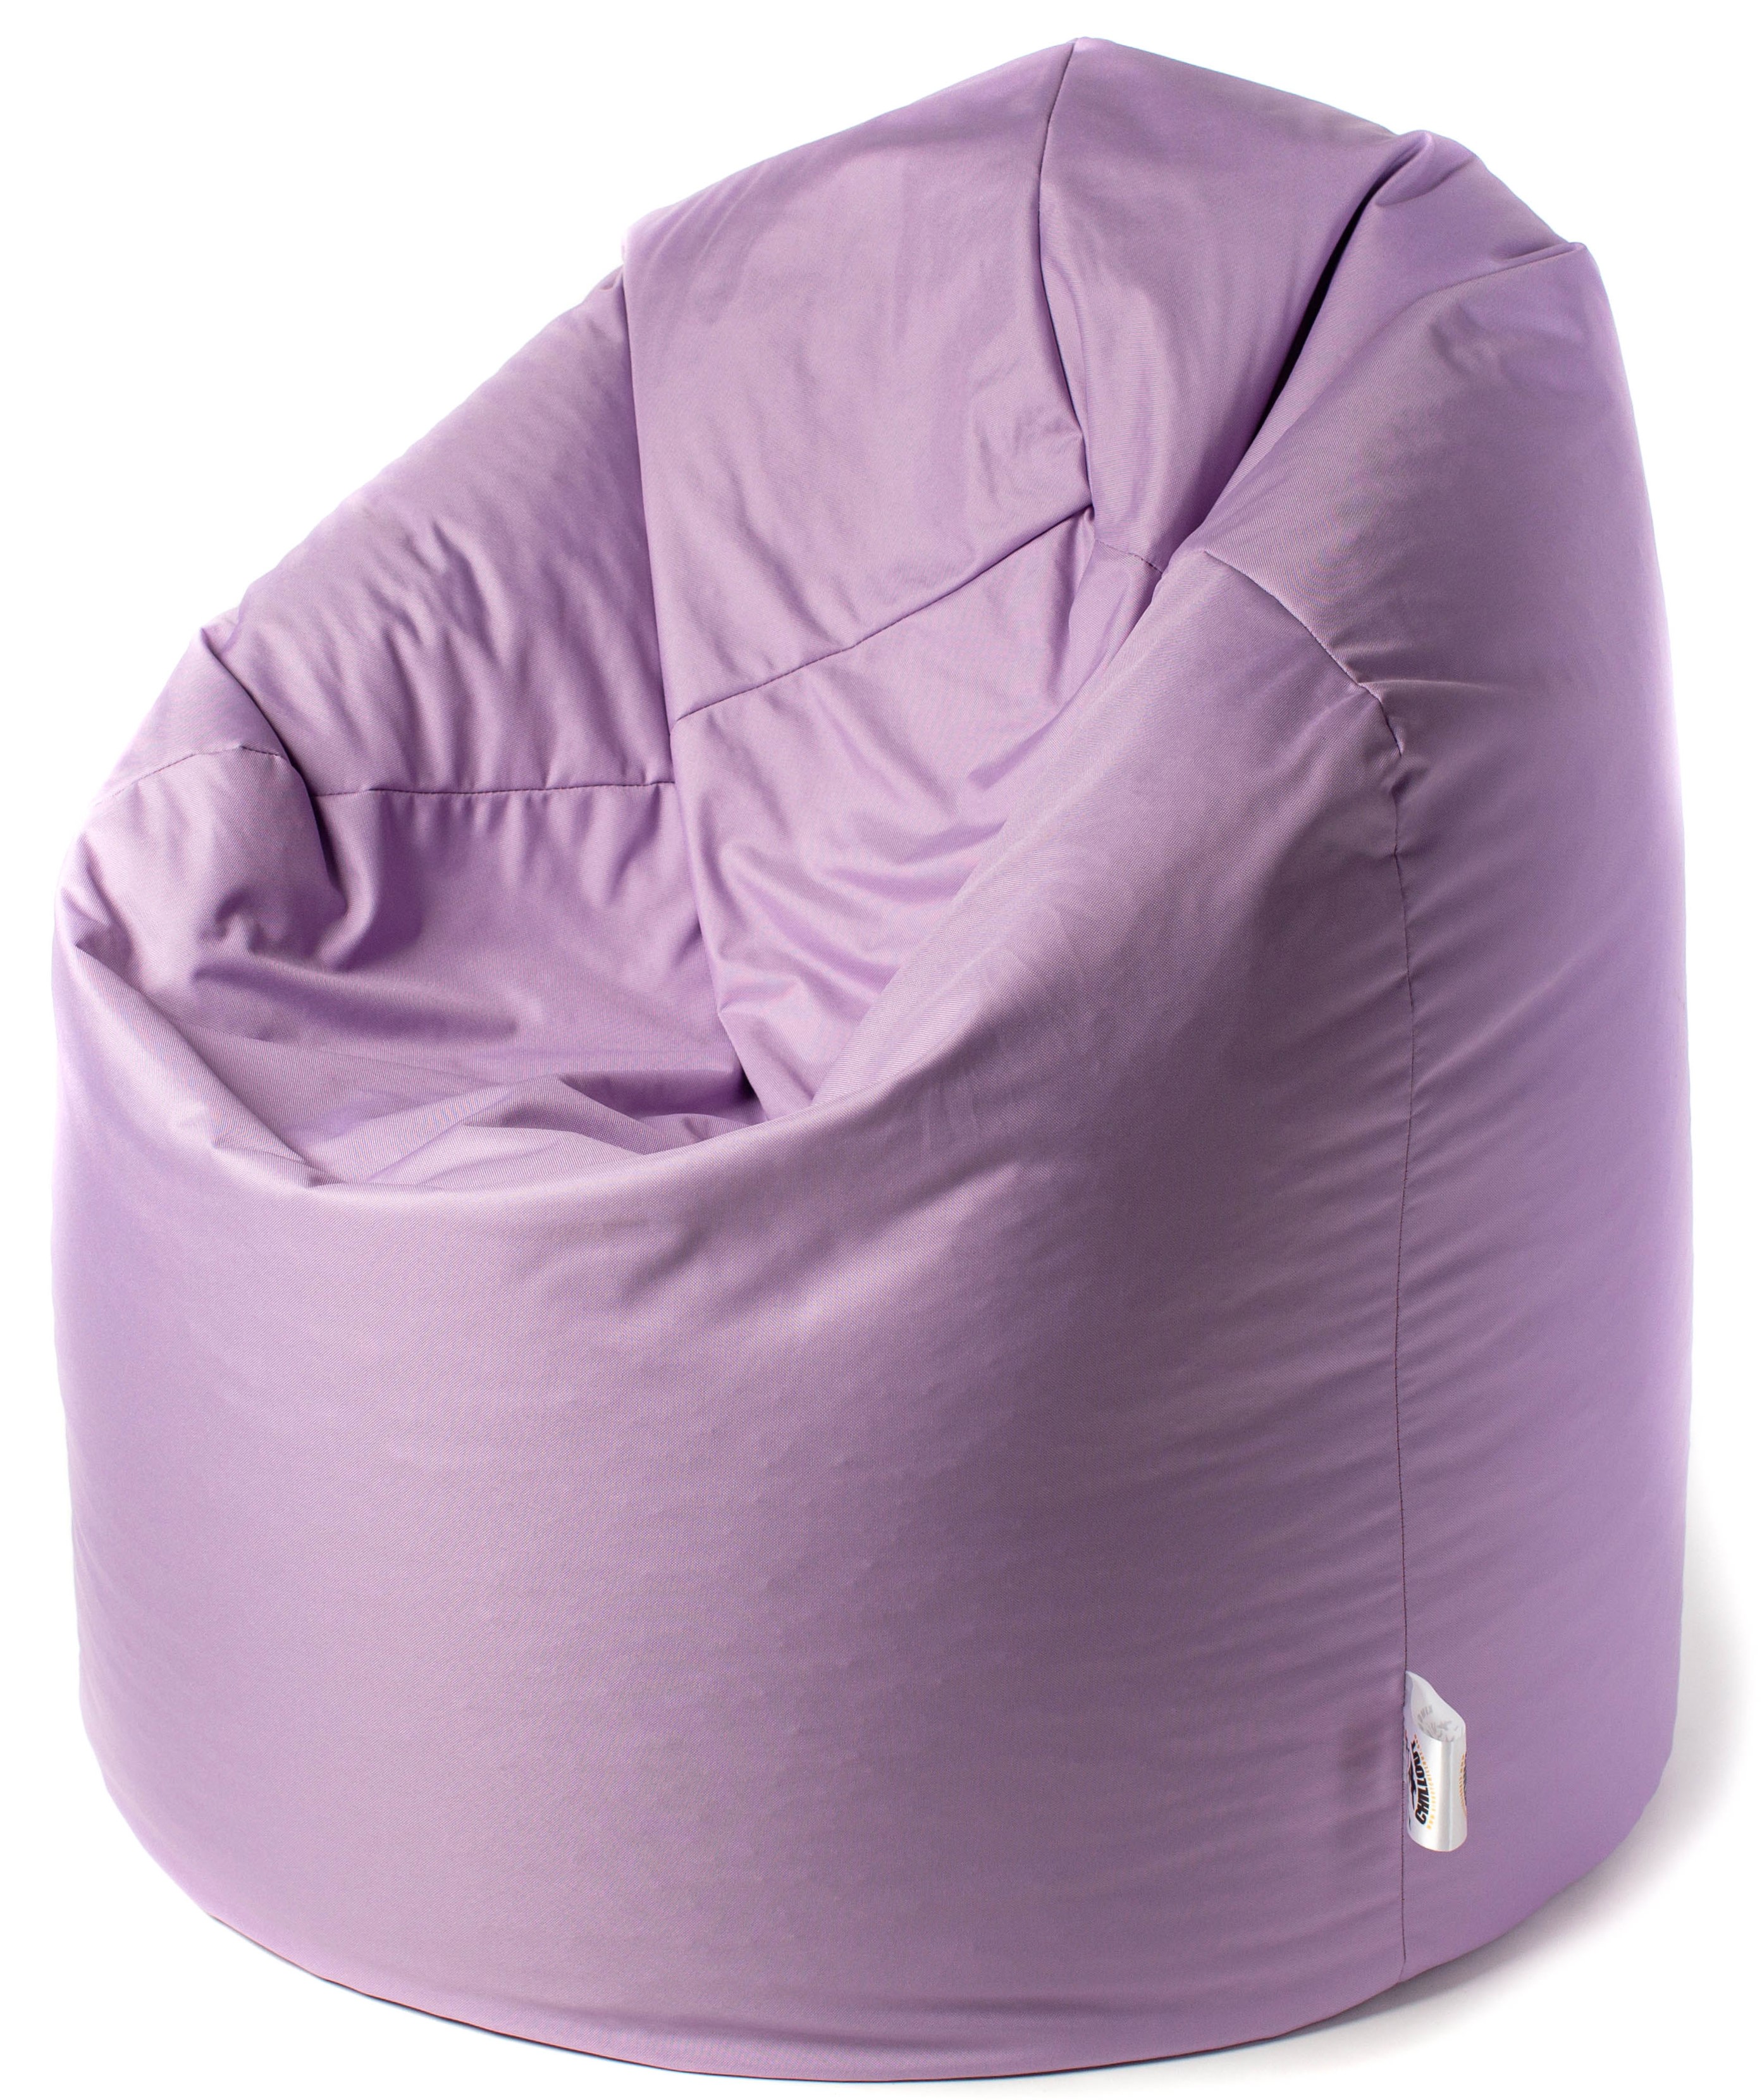 Bean Bag XL Sitzsack Sessel Sitzkissen in